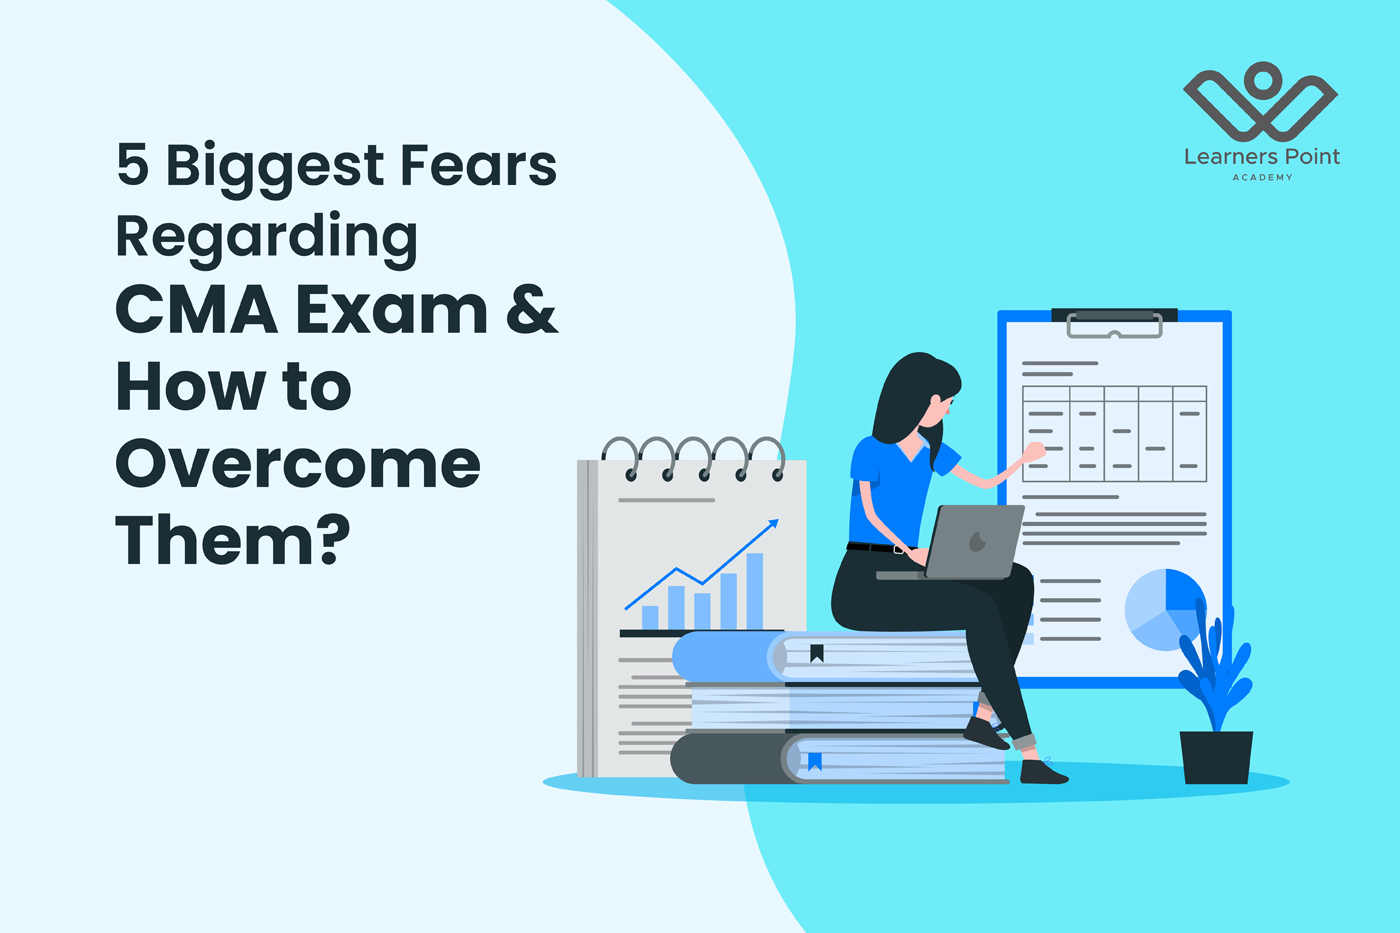 5 Biggest Fears Regarding CMA Exam & How to Overcome Them?